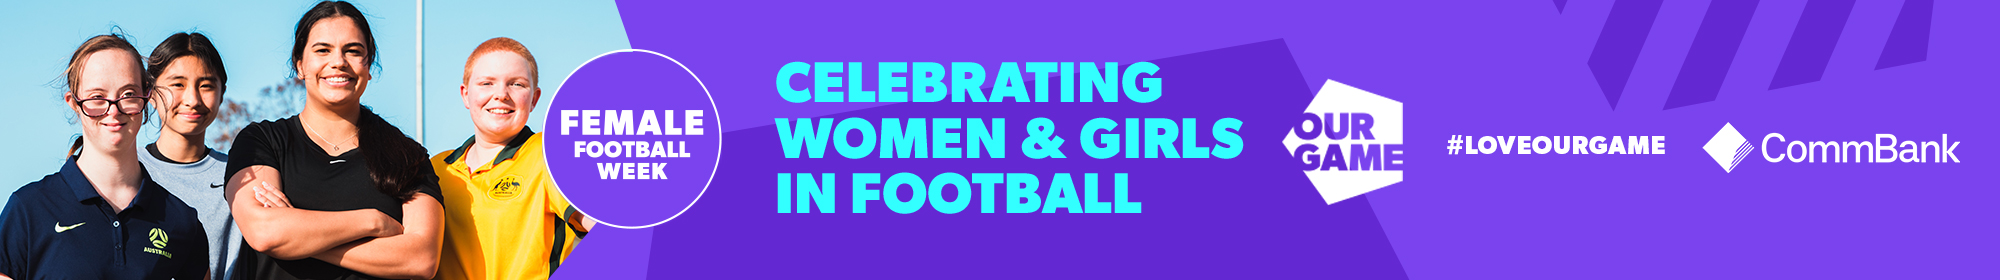 Female Football Week Banner